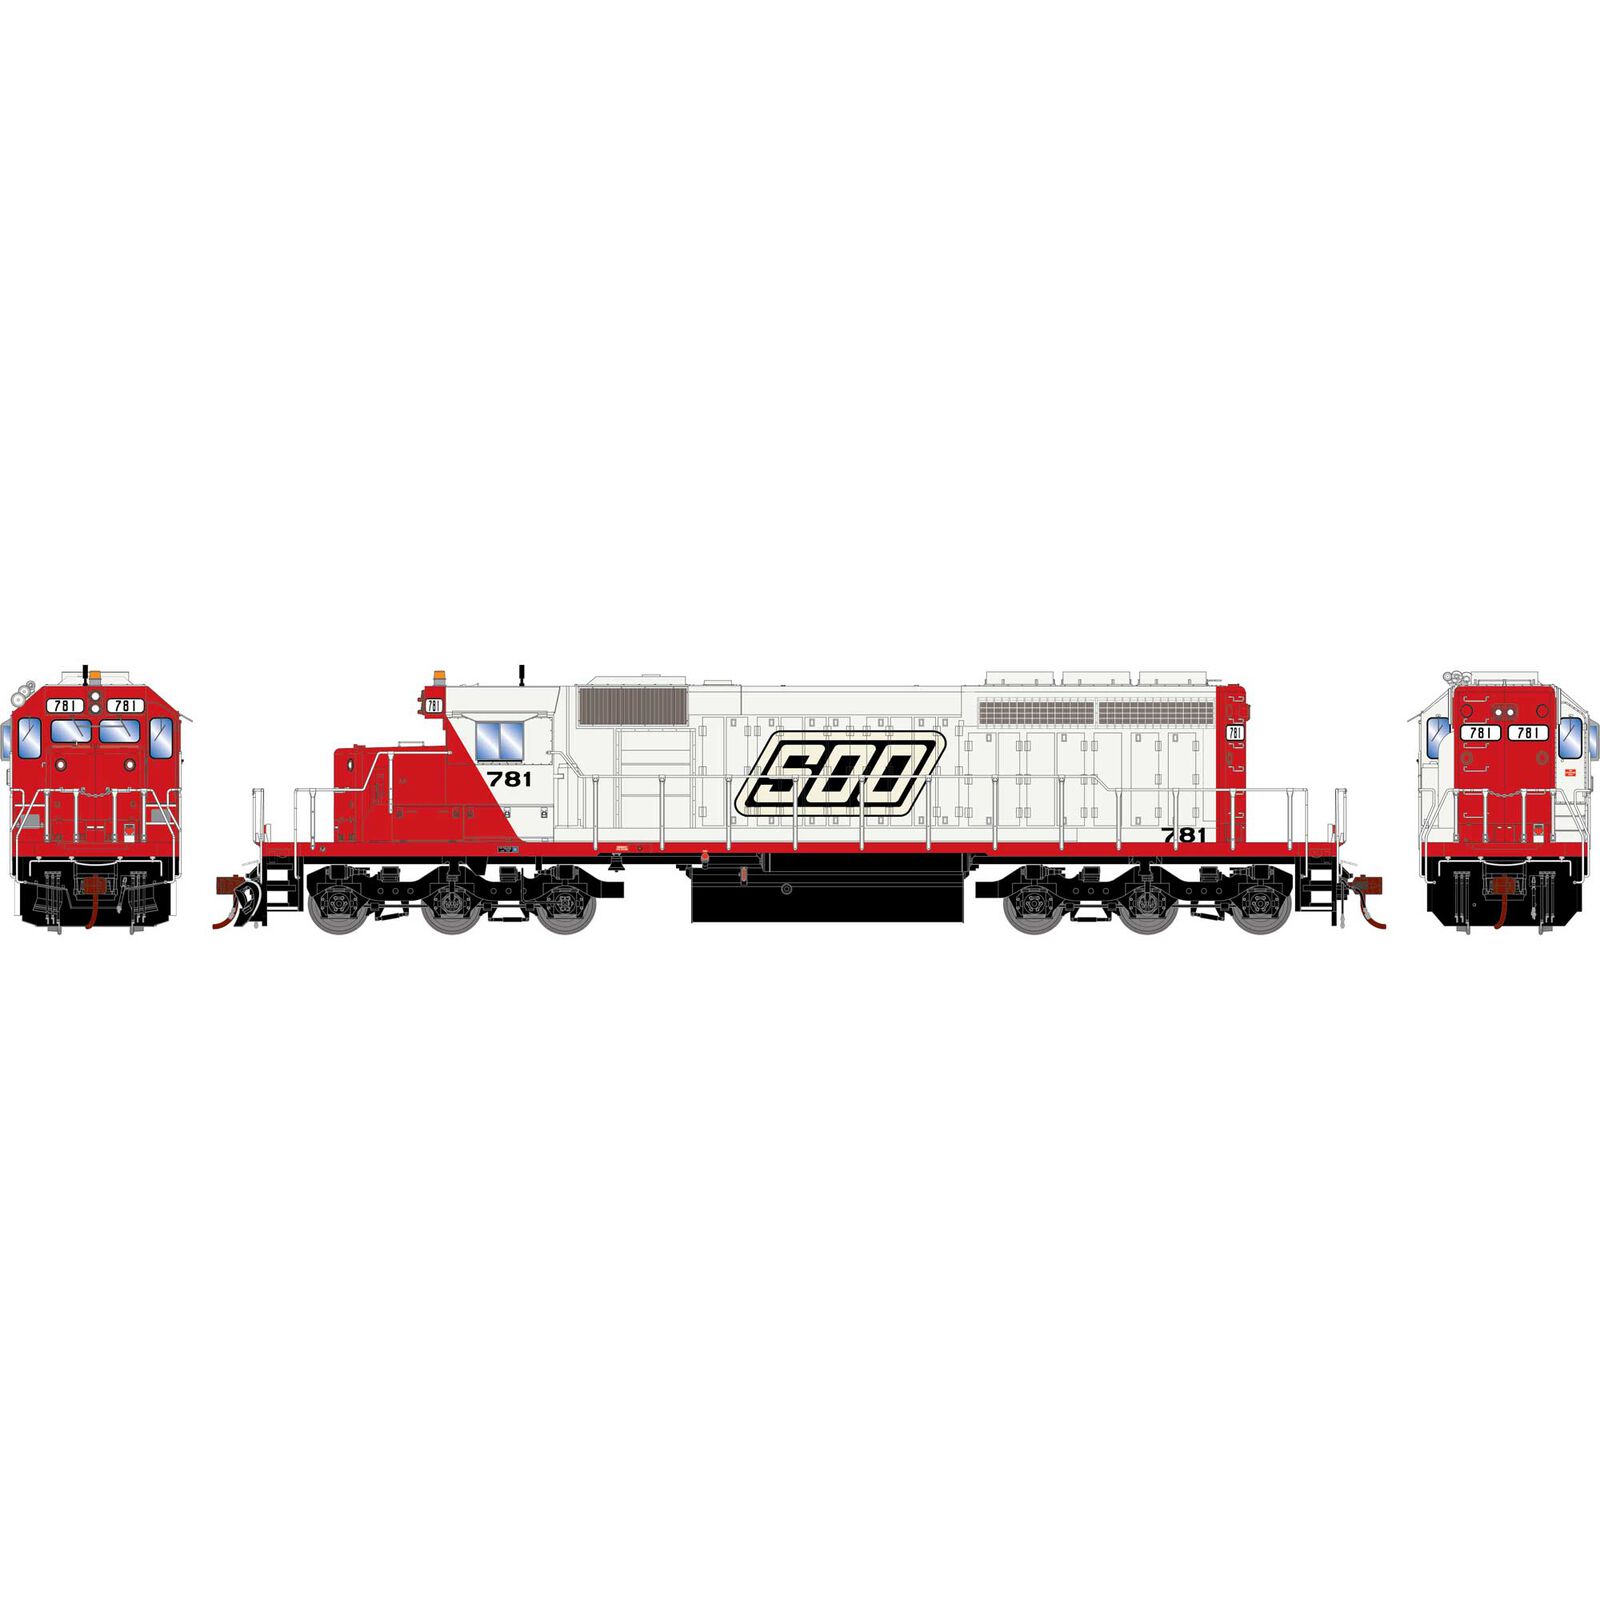 HO EMD SD40-2 Locomotive, SOO #781